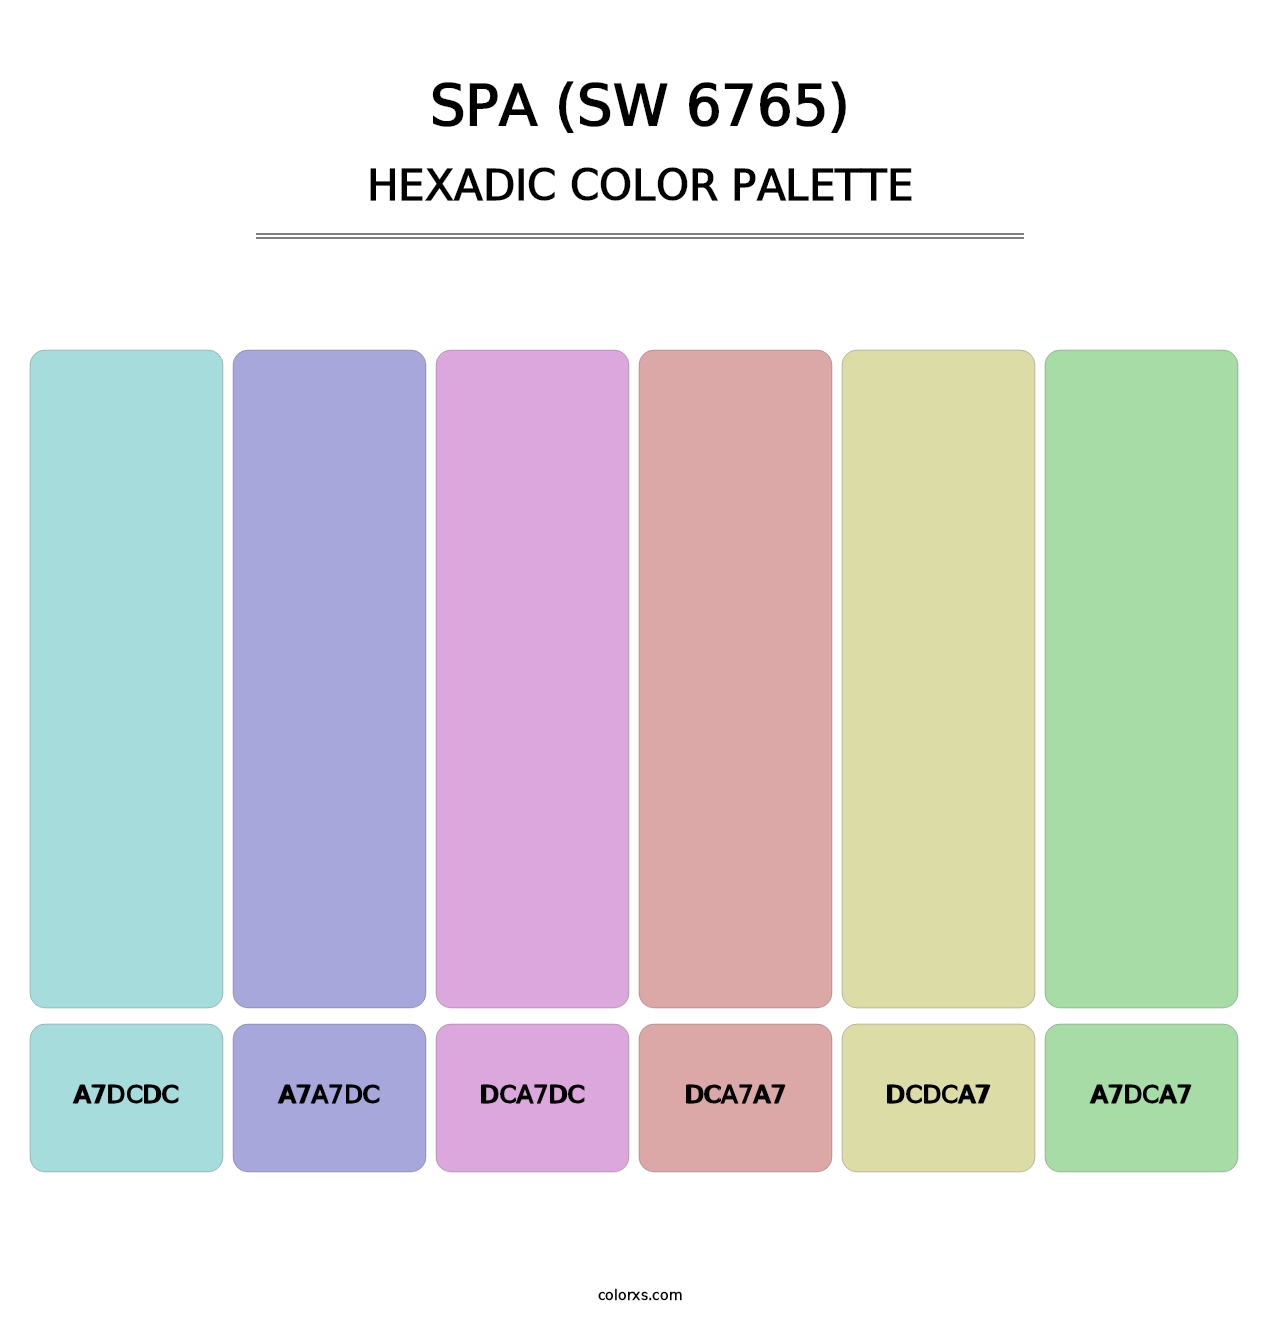 Spa (SW 6765) - Hexadic Color Palette